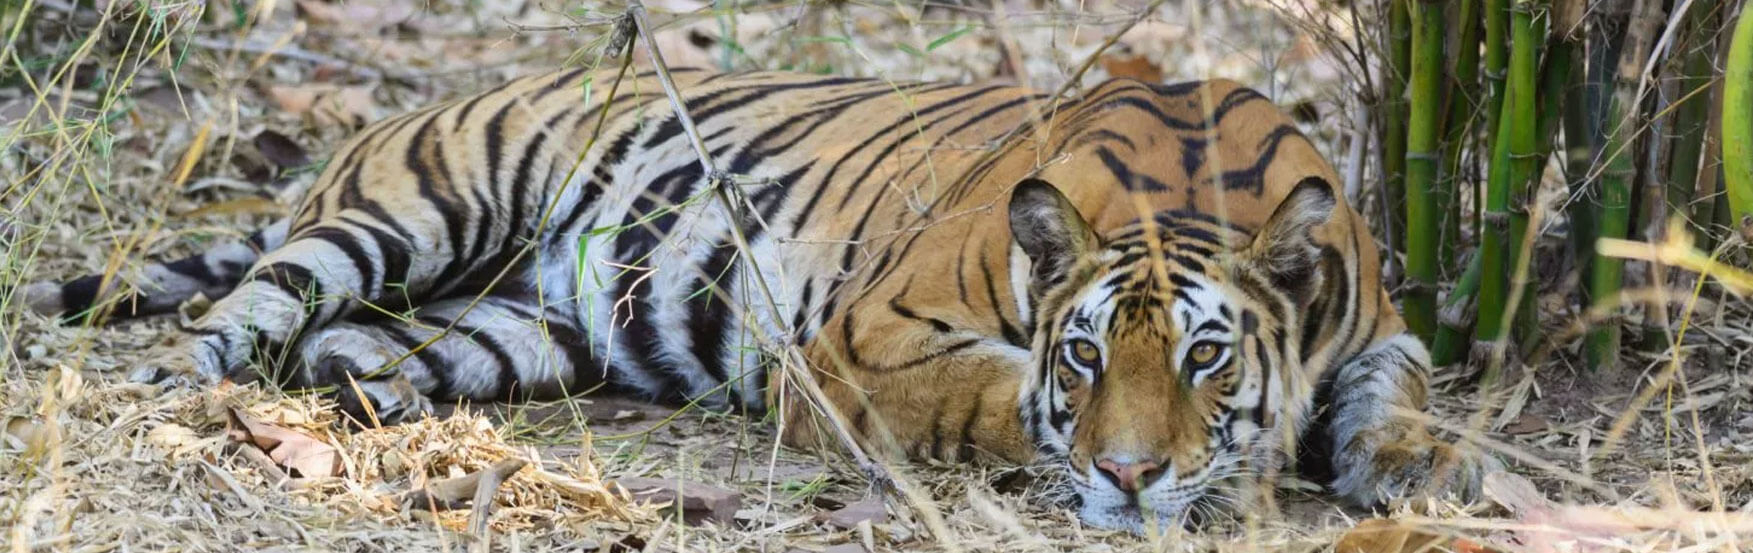 Information about Panna Tiger Reserve, Madhya Pradesh, India